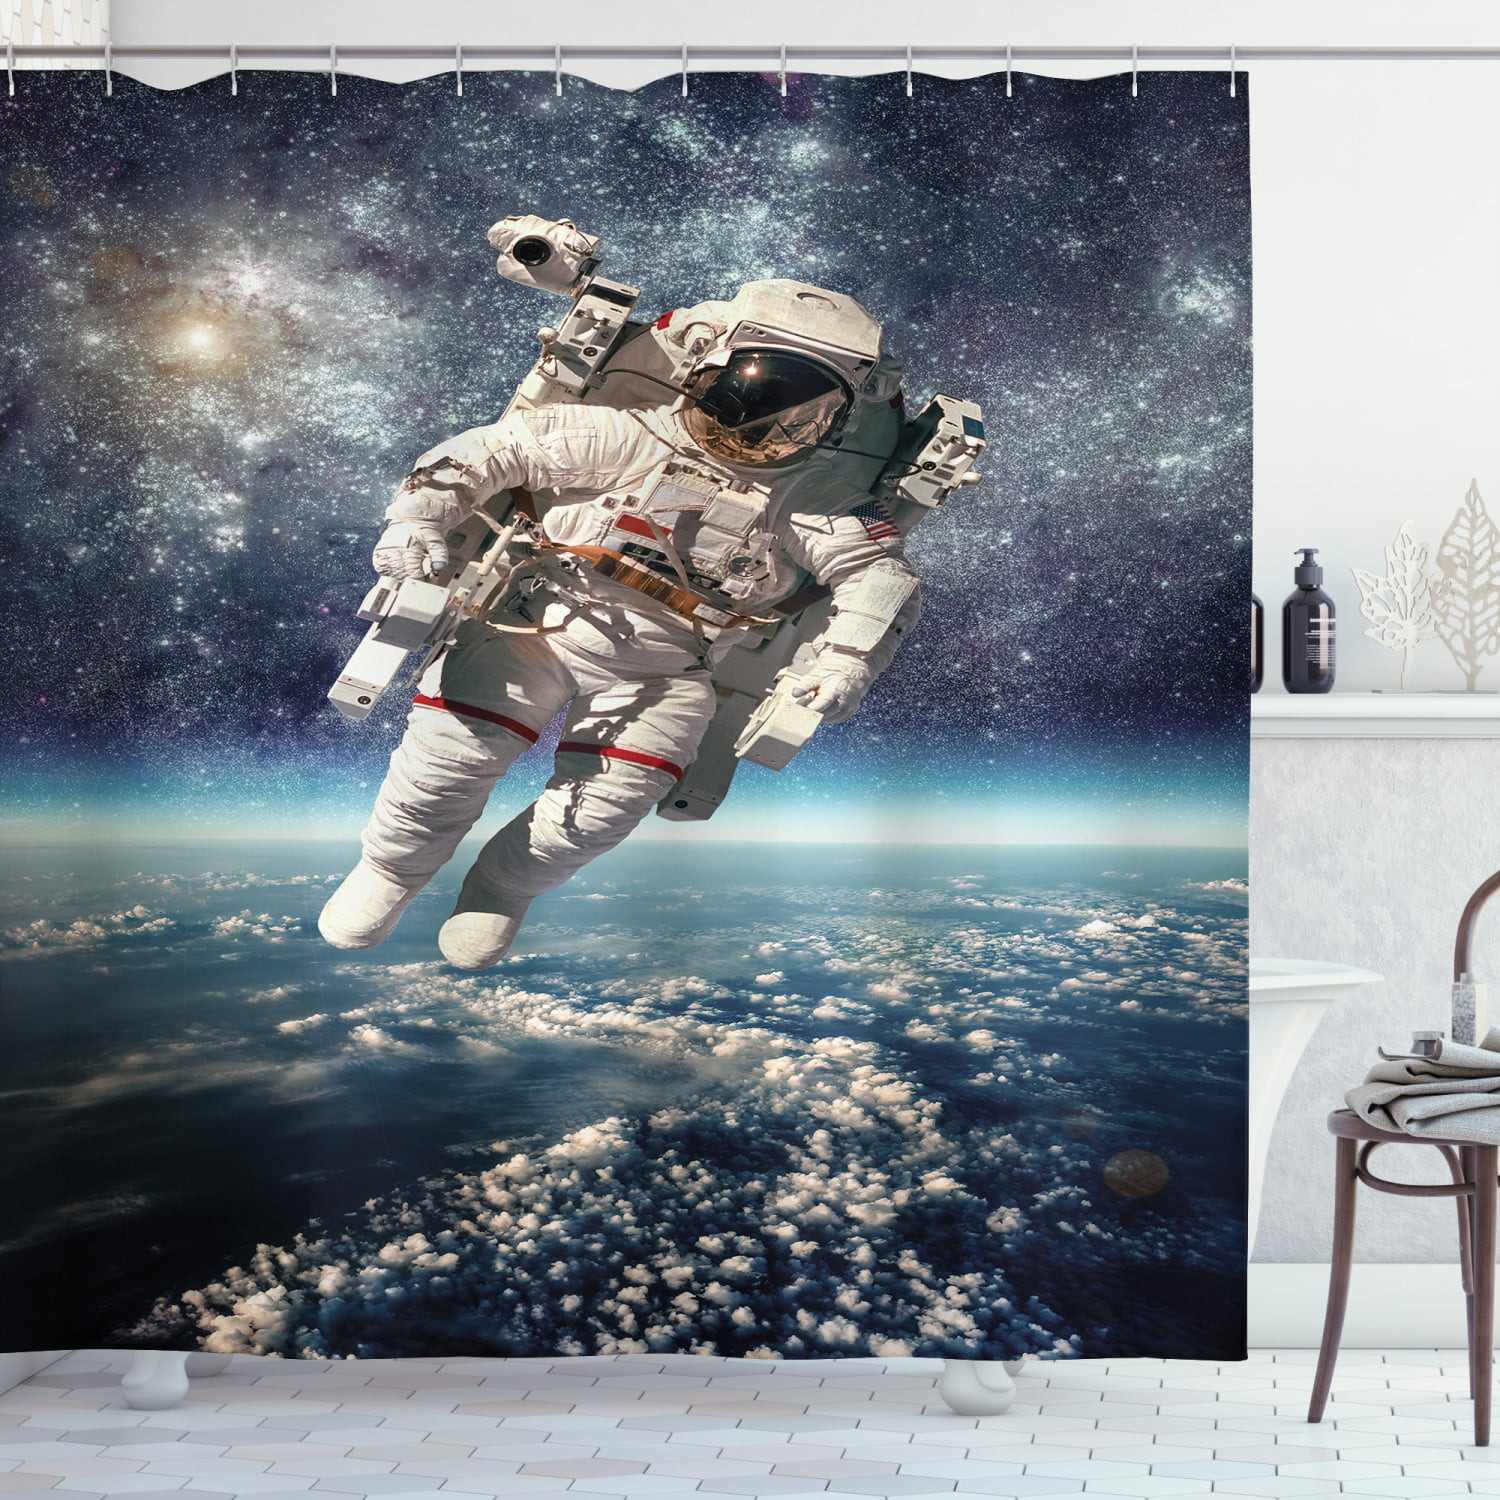 Space Astronaut Planet Shower Curtain Set Bathroom Waterproof Fabric & 12hooks 